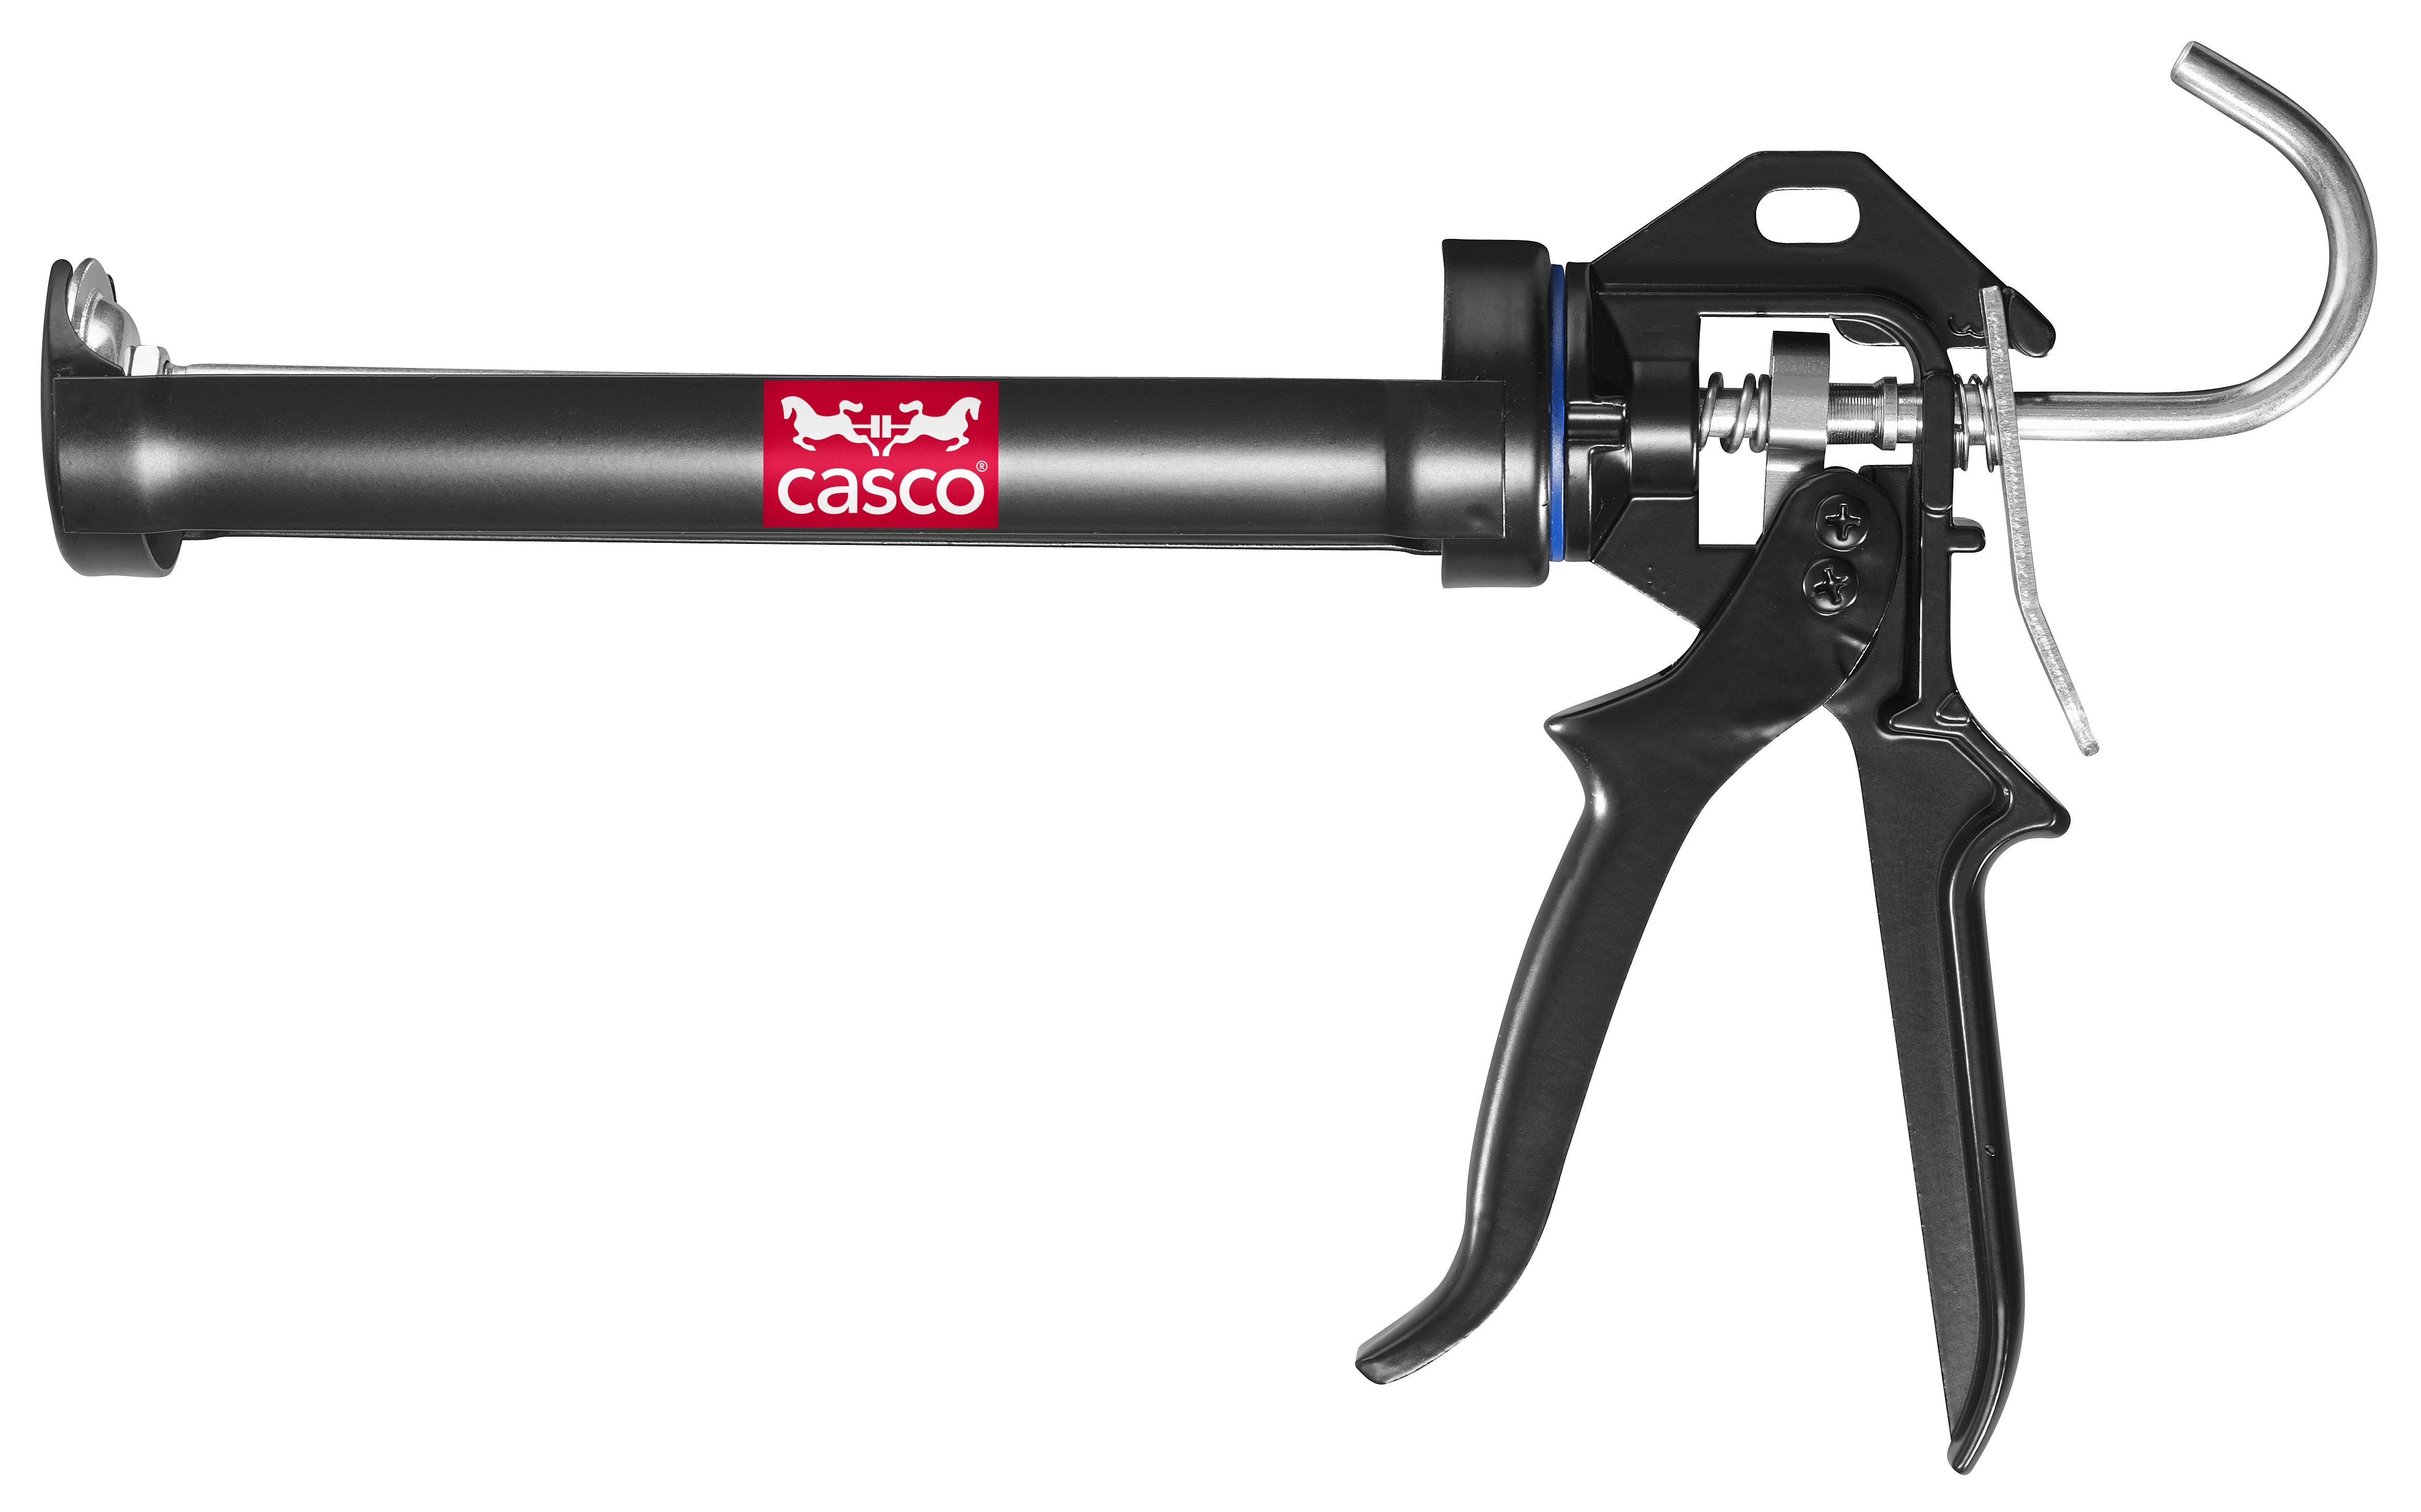 Casco ProGun P160 fugepistol